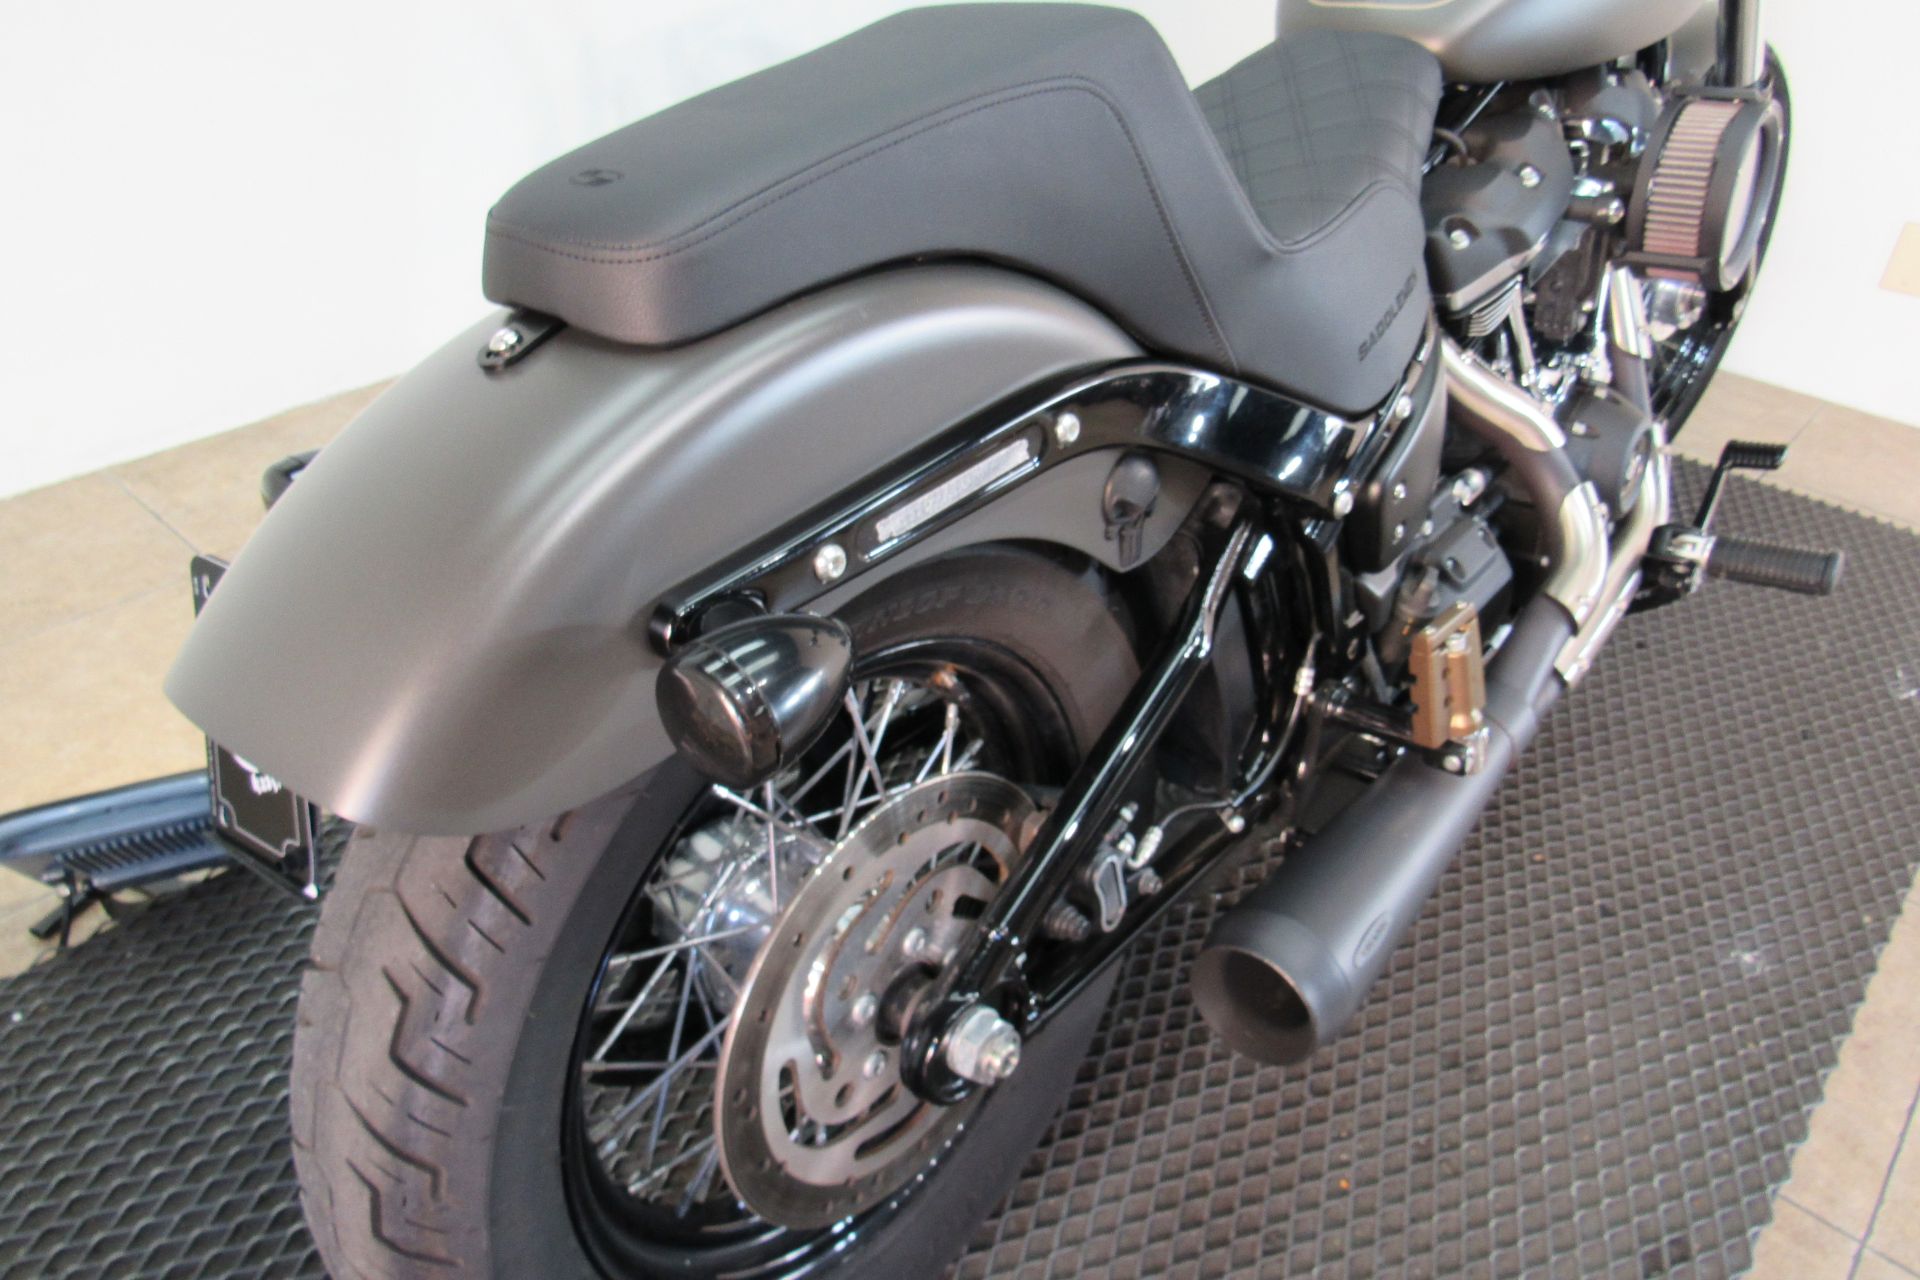 2019 Harley-Davidson Street Bob® in Temecula, California - Photo 25